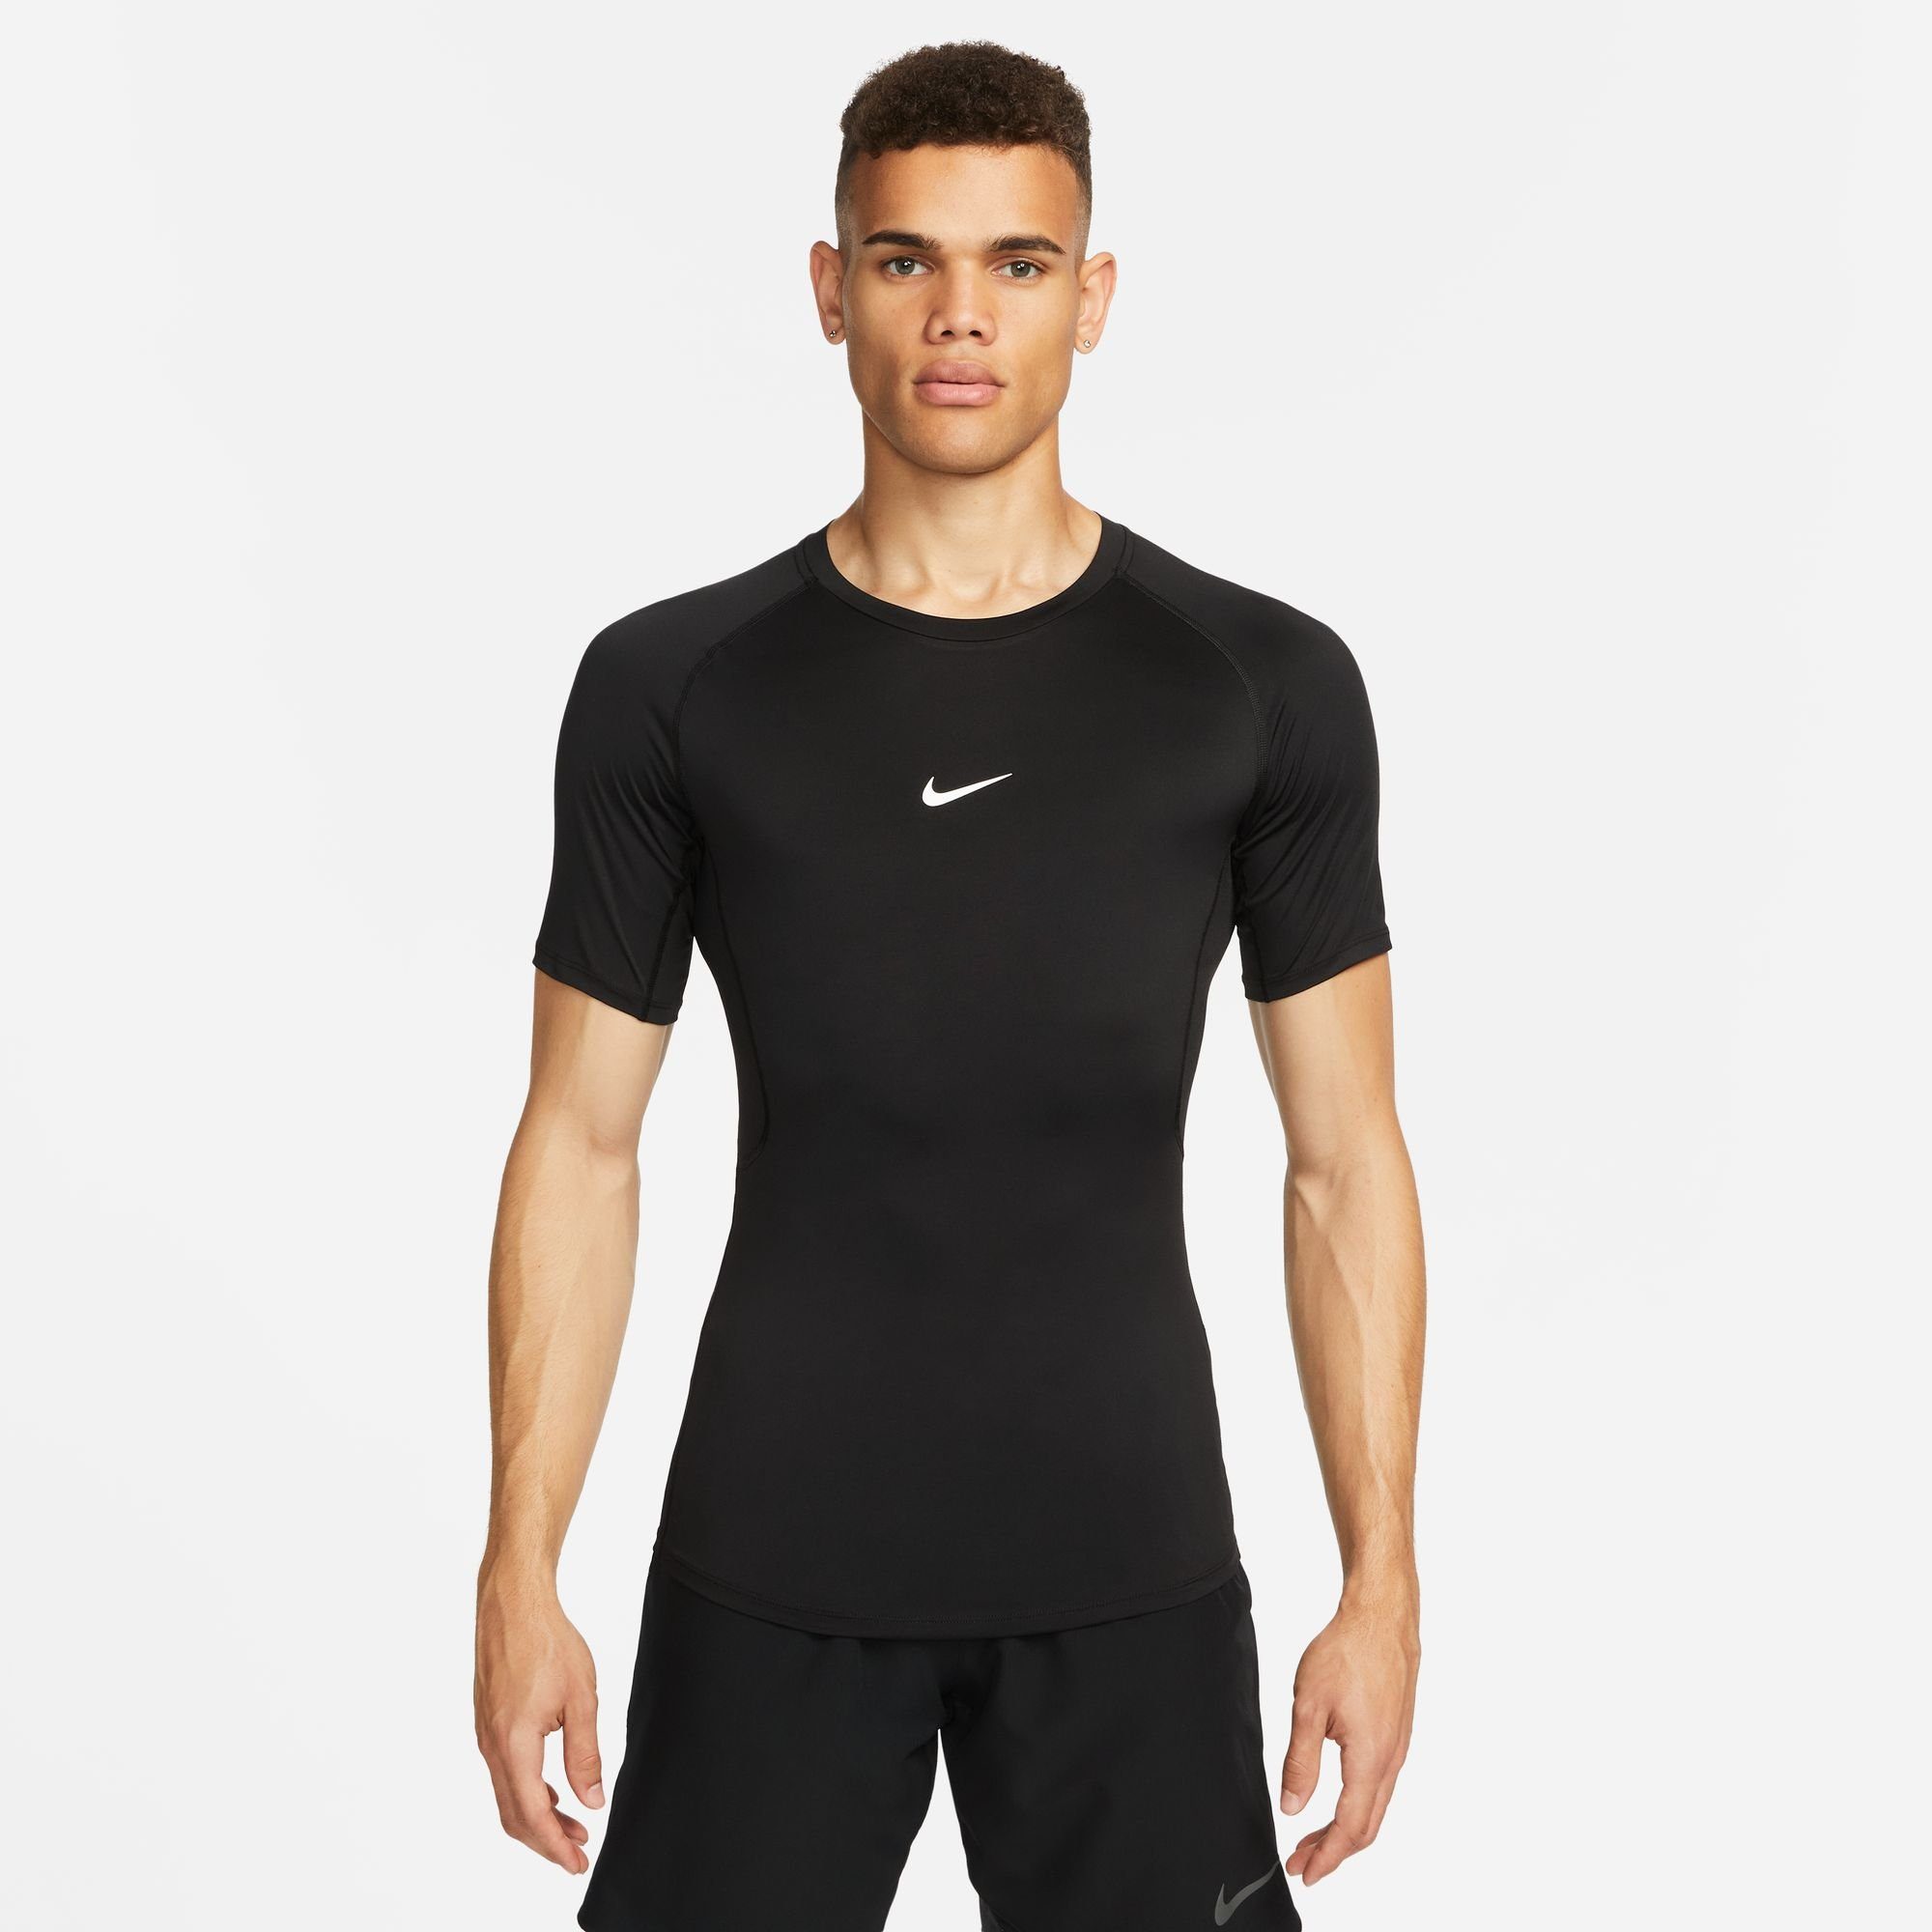 Großer Rabatt-SALE Nike Trainingsshirt PRO DRI-FIT MEN'S TOP TIGHT SHORT-SLEEVE